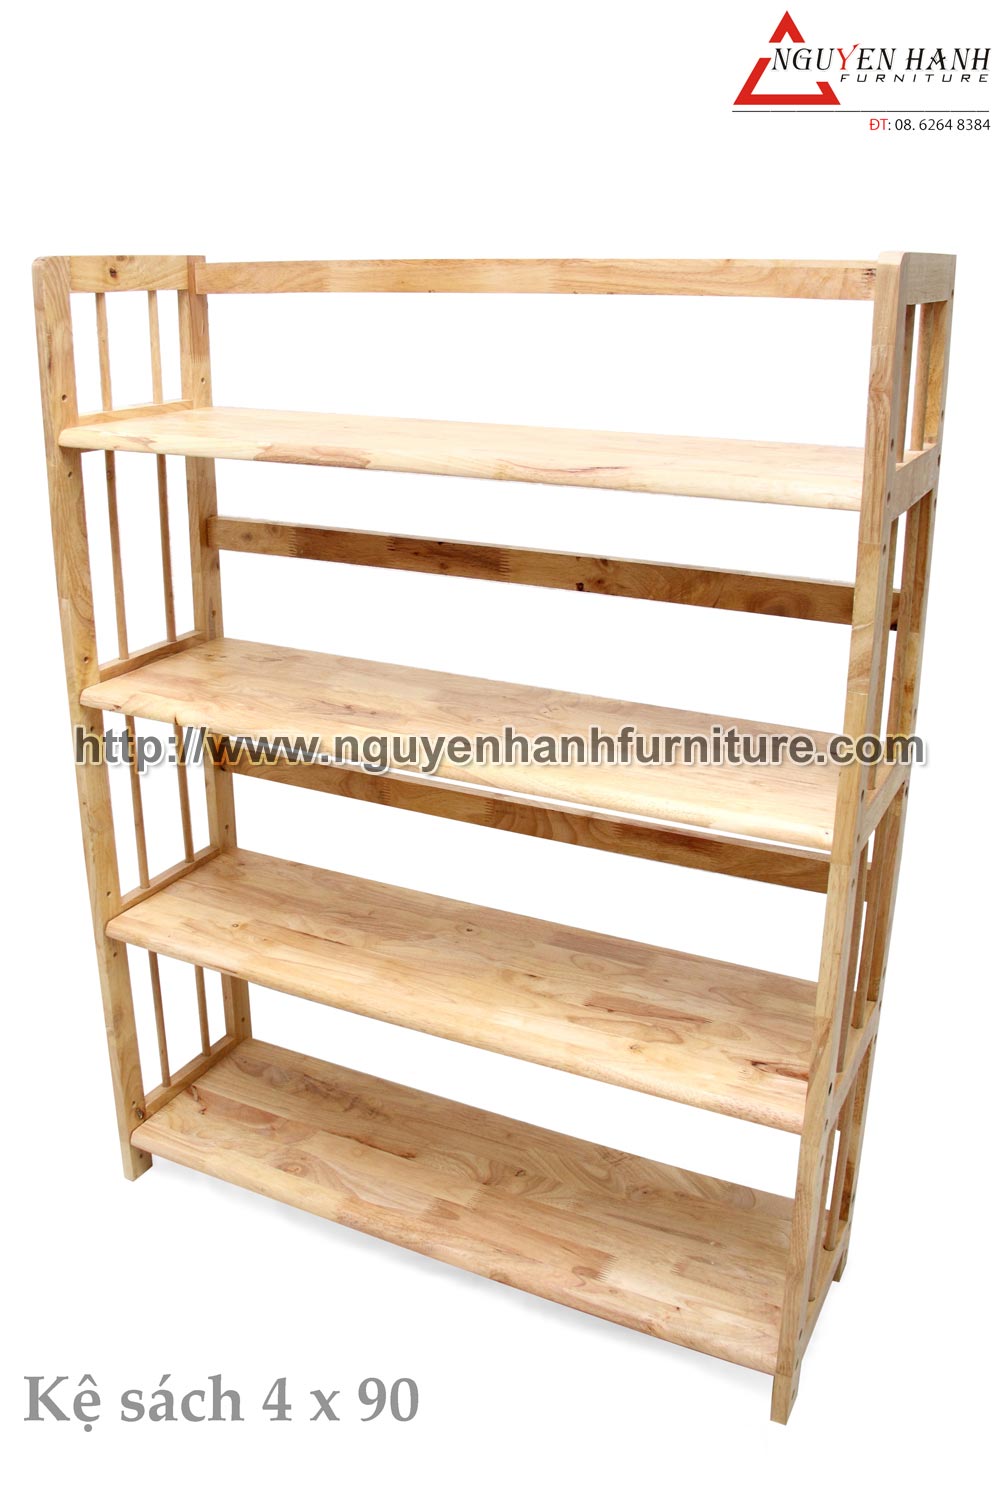 Name product: 4 storey Adjustable Bookshelf 90 (Natural) - Dimensions: 80 x 28 x 120 (H) - Description: Wood natural rubber